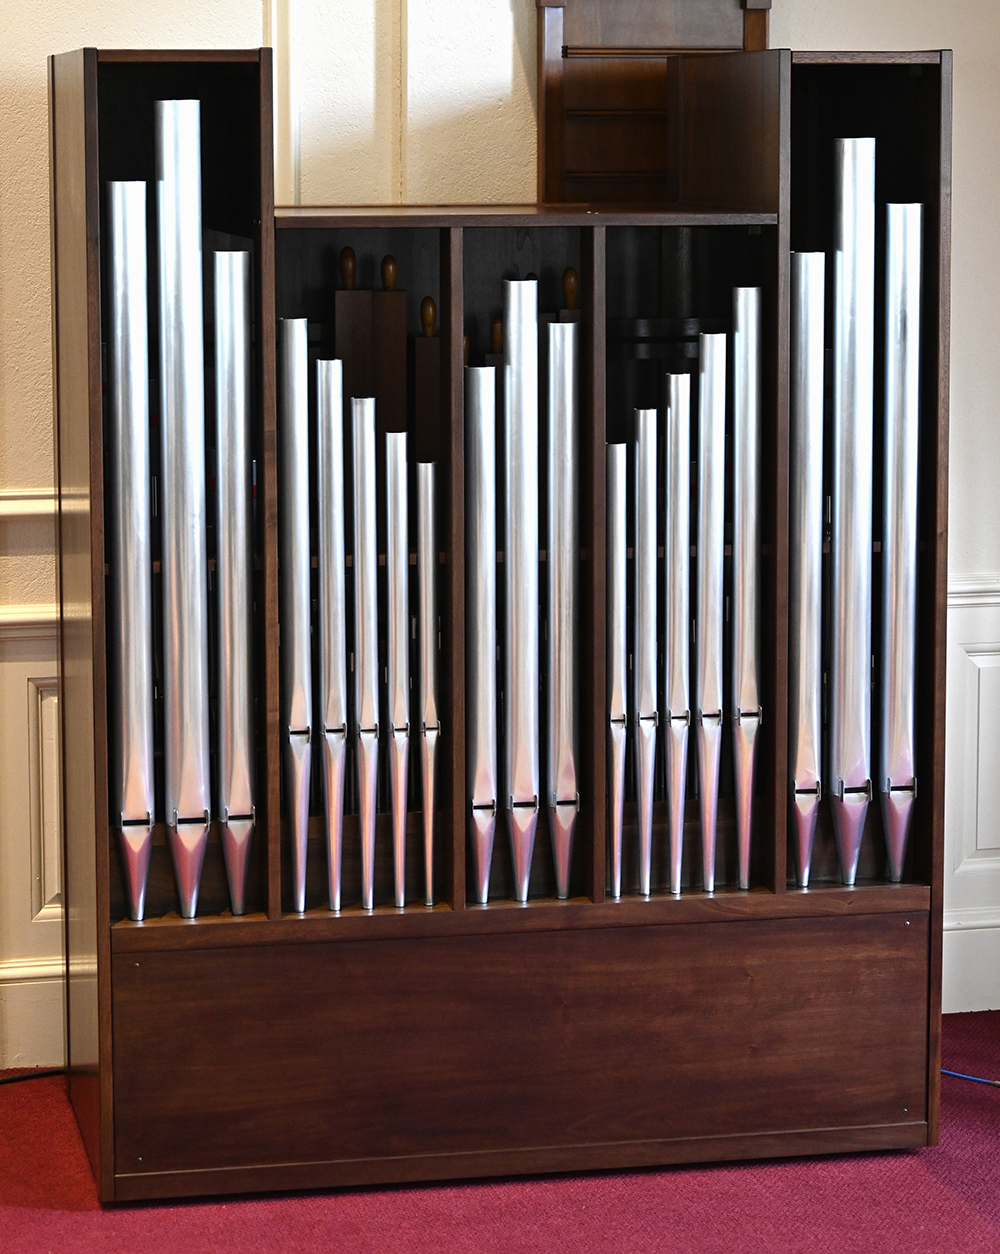 5-rank Chamber Organ